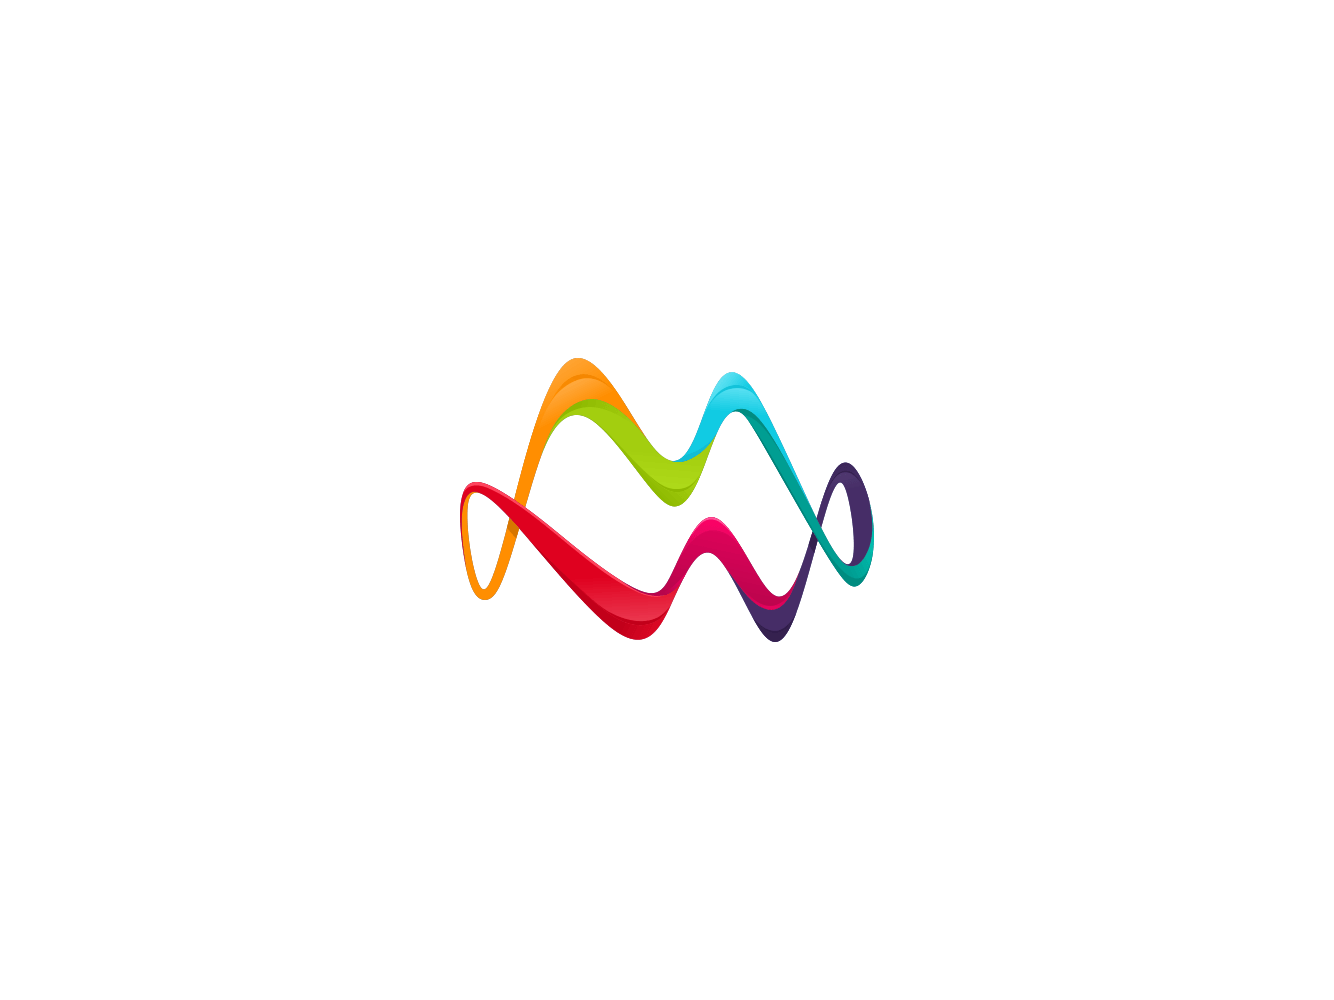 Waveform Logo - MW by Dorde K. on Dribbble